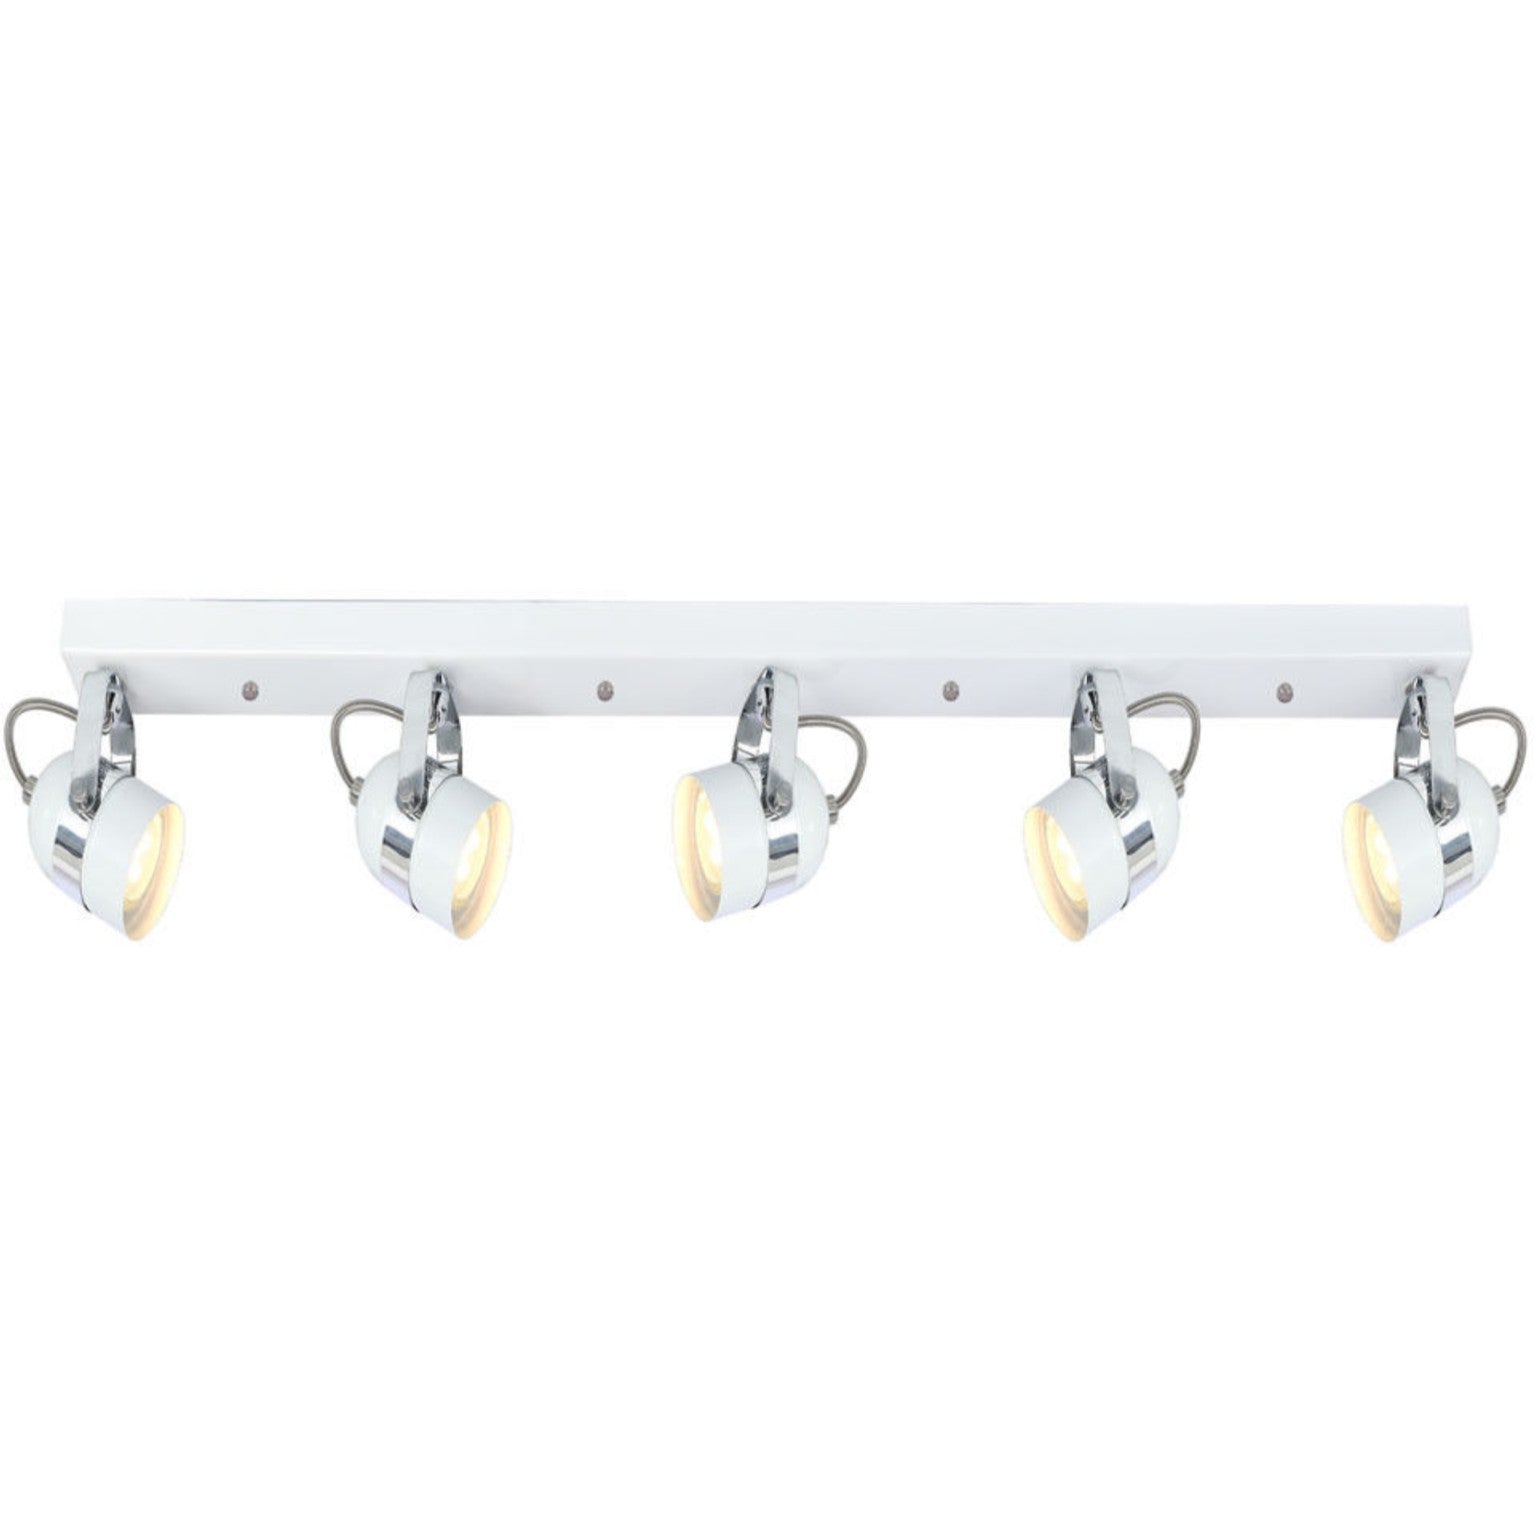 Modern 5 Way Straight Bar Ceiling Spotlight Fitting in a Gloss White Finish UKEW